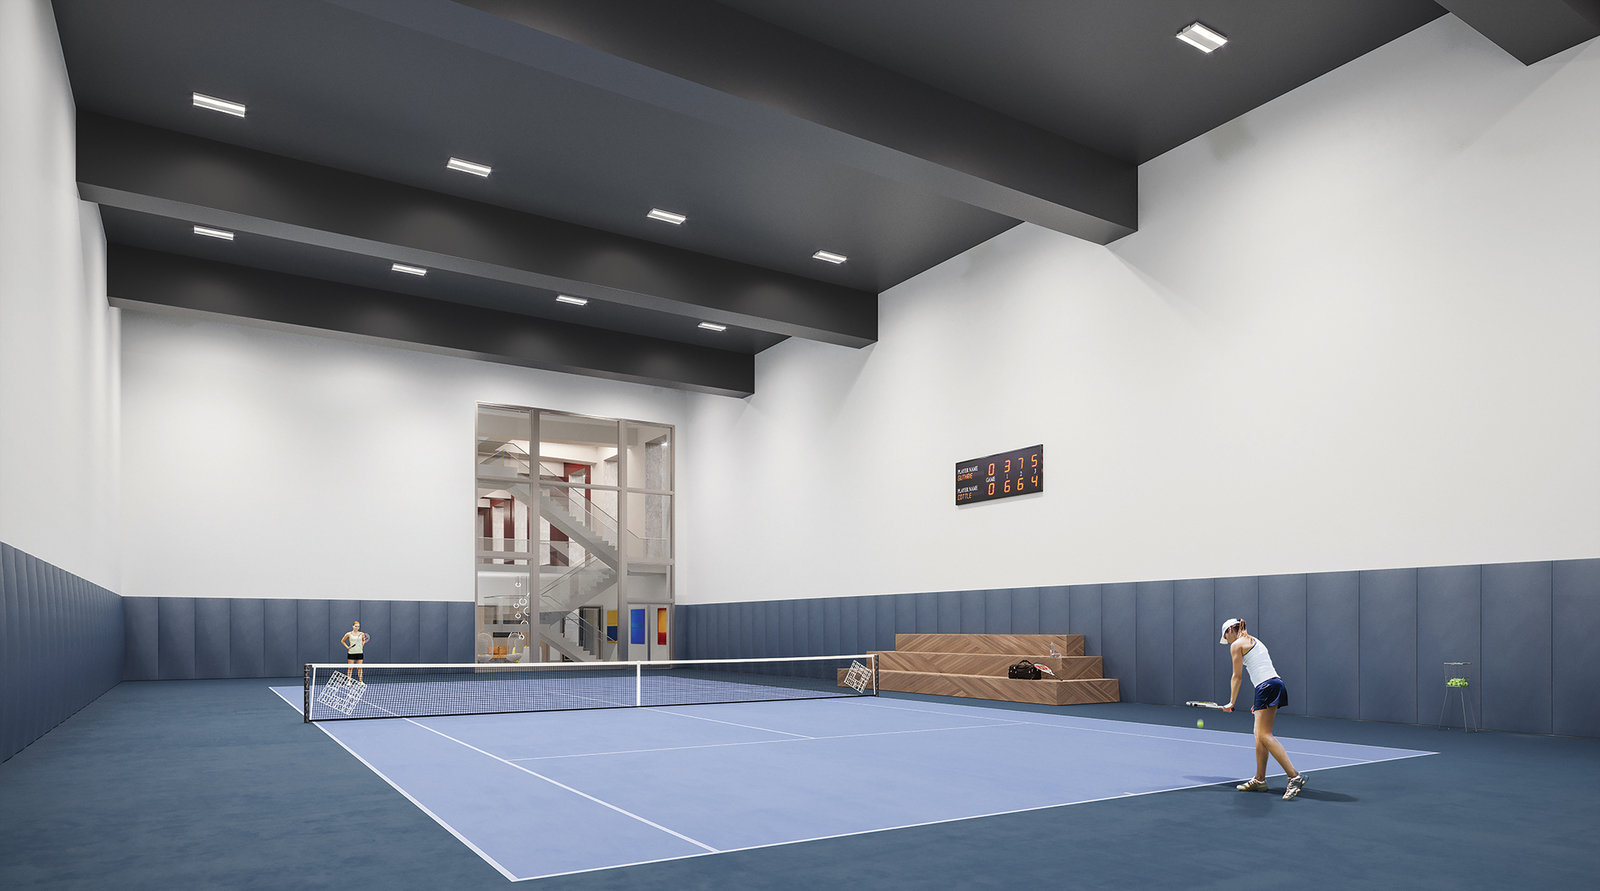 Waterline square the waterline club amenities indoor tennis with scoreboard cmyk 1600 0x0x2000x1114 q85